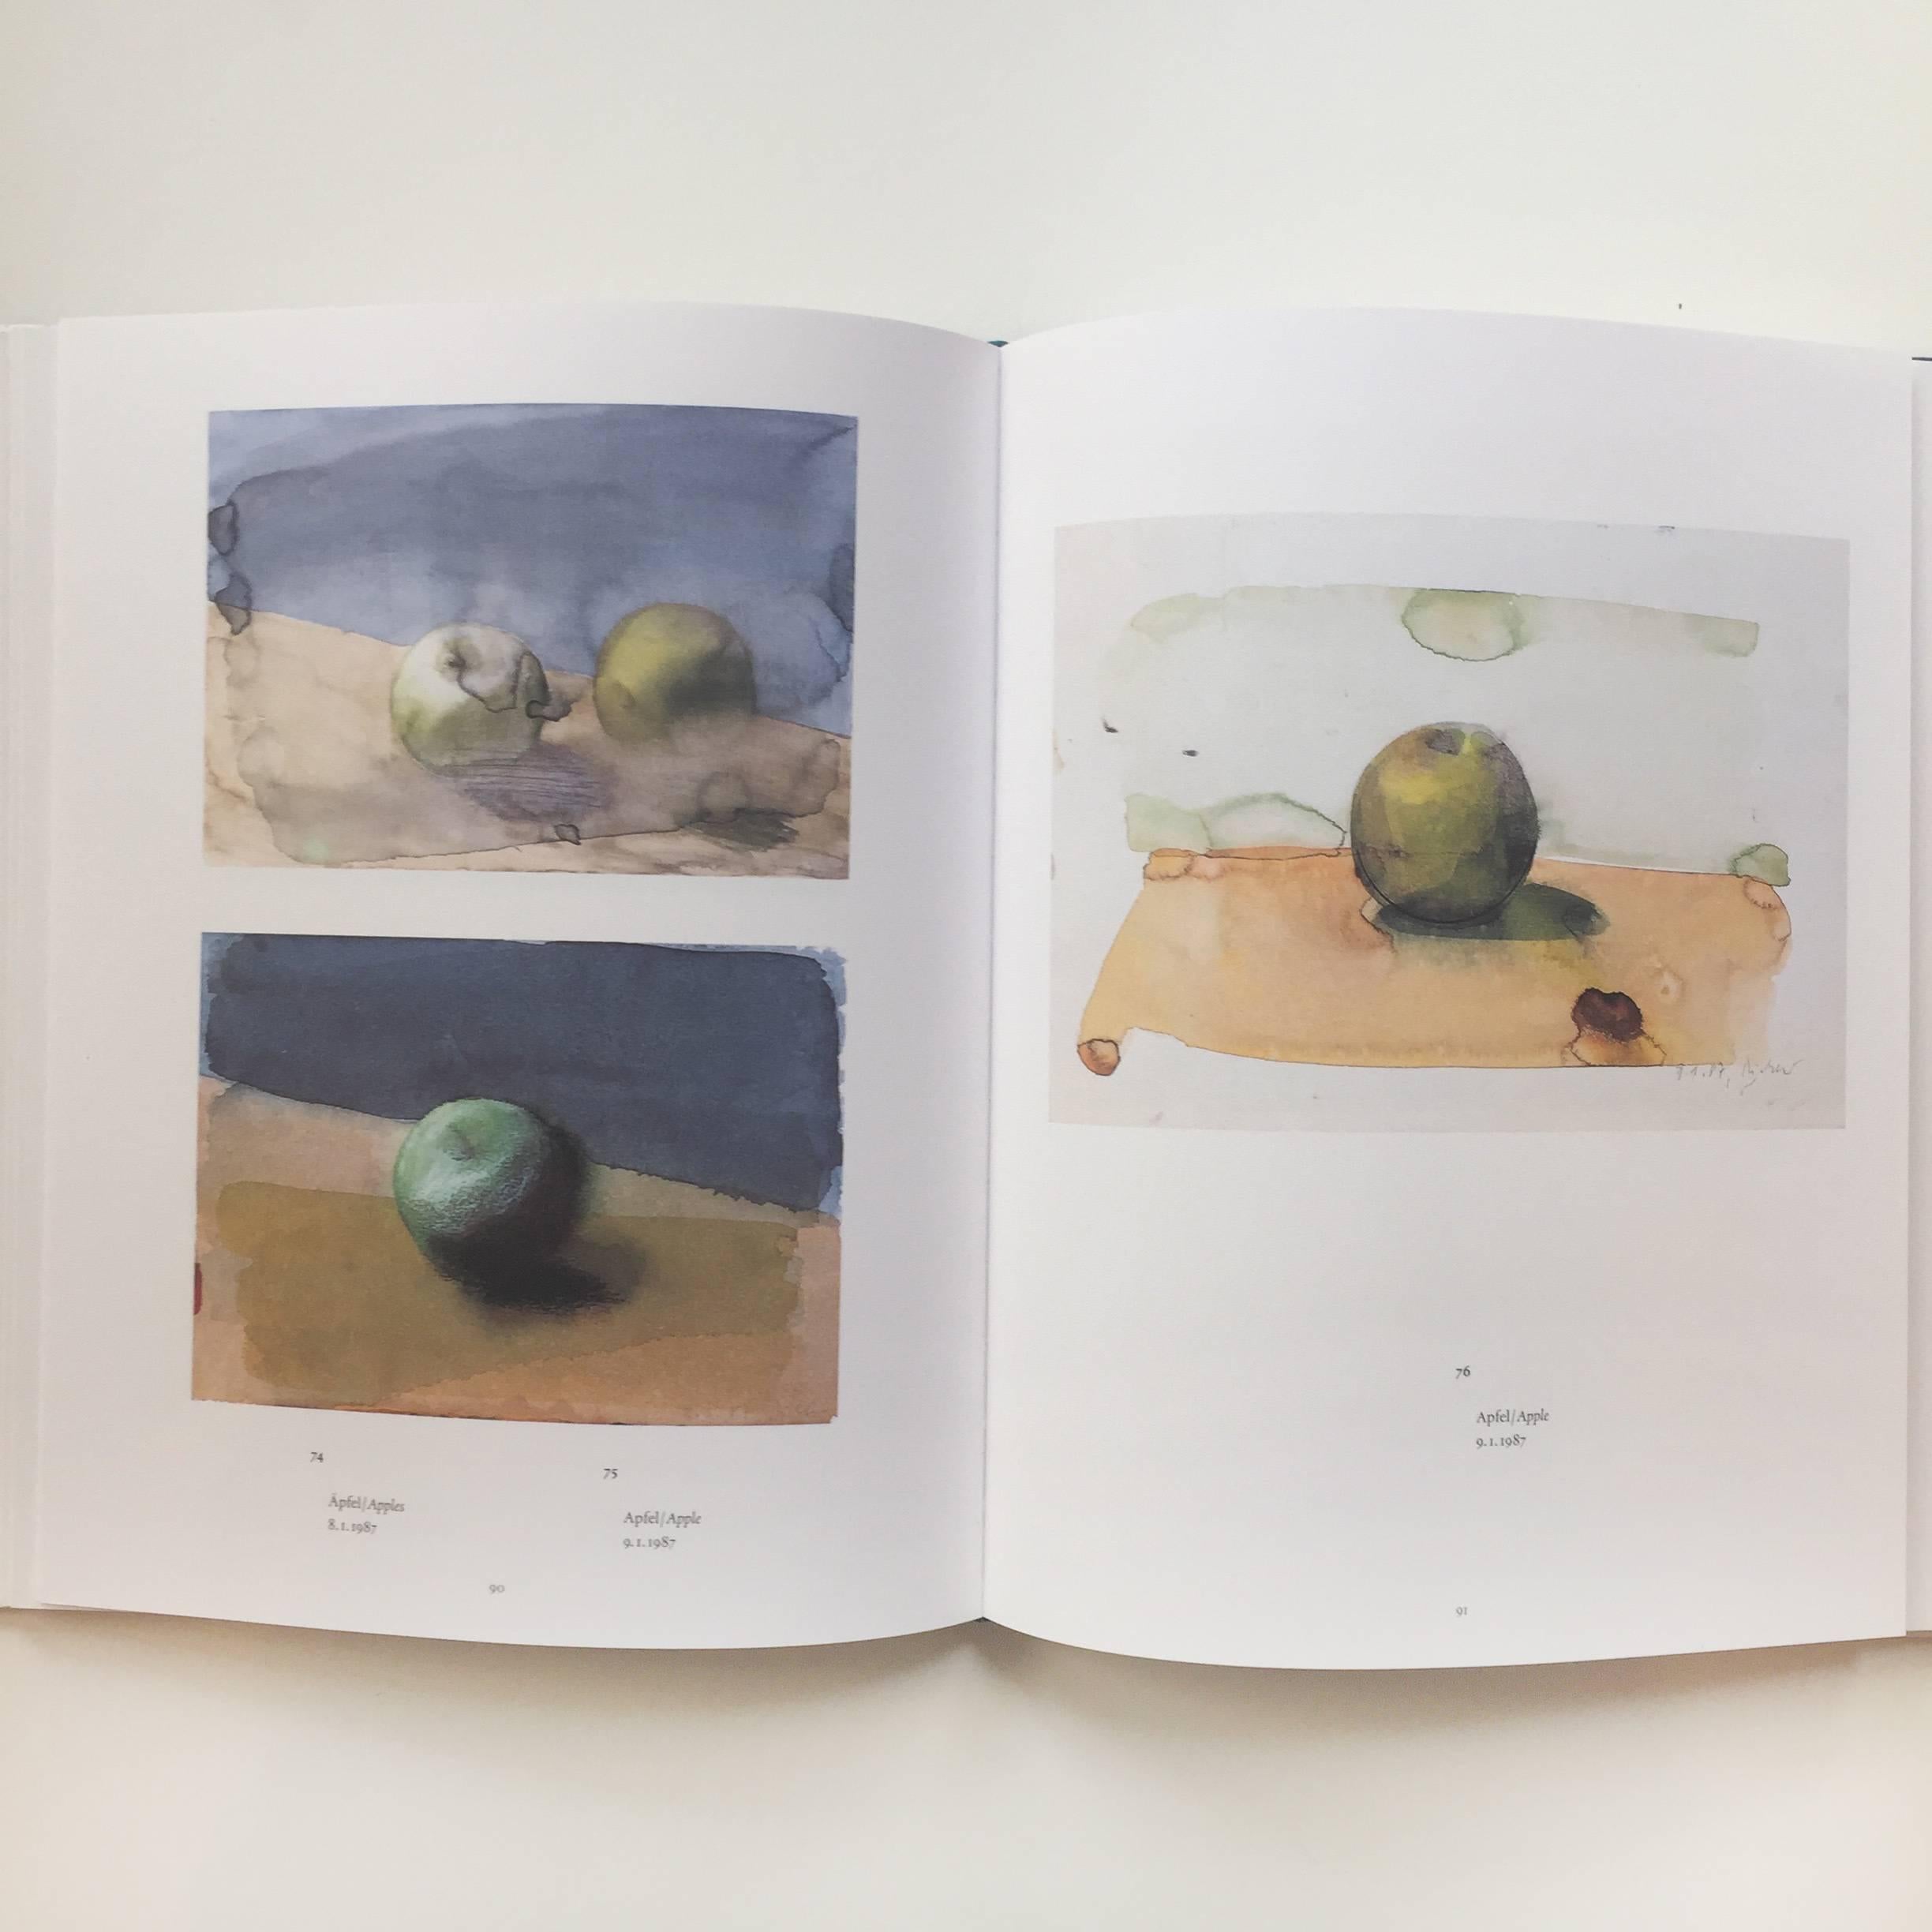 German Gerhard Richter,  Aquarelle or Watercolours, 1964-1997